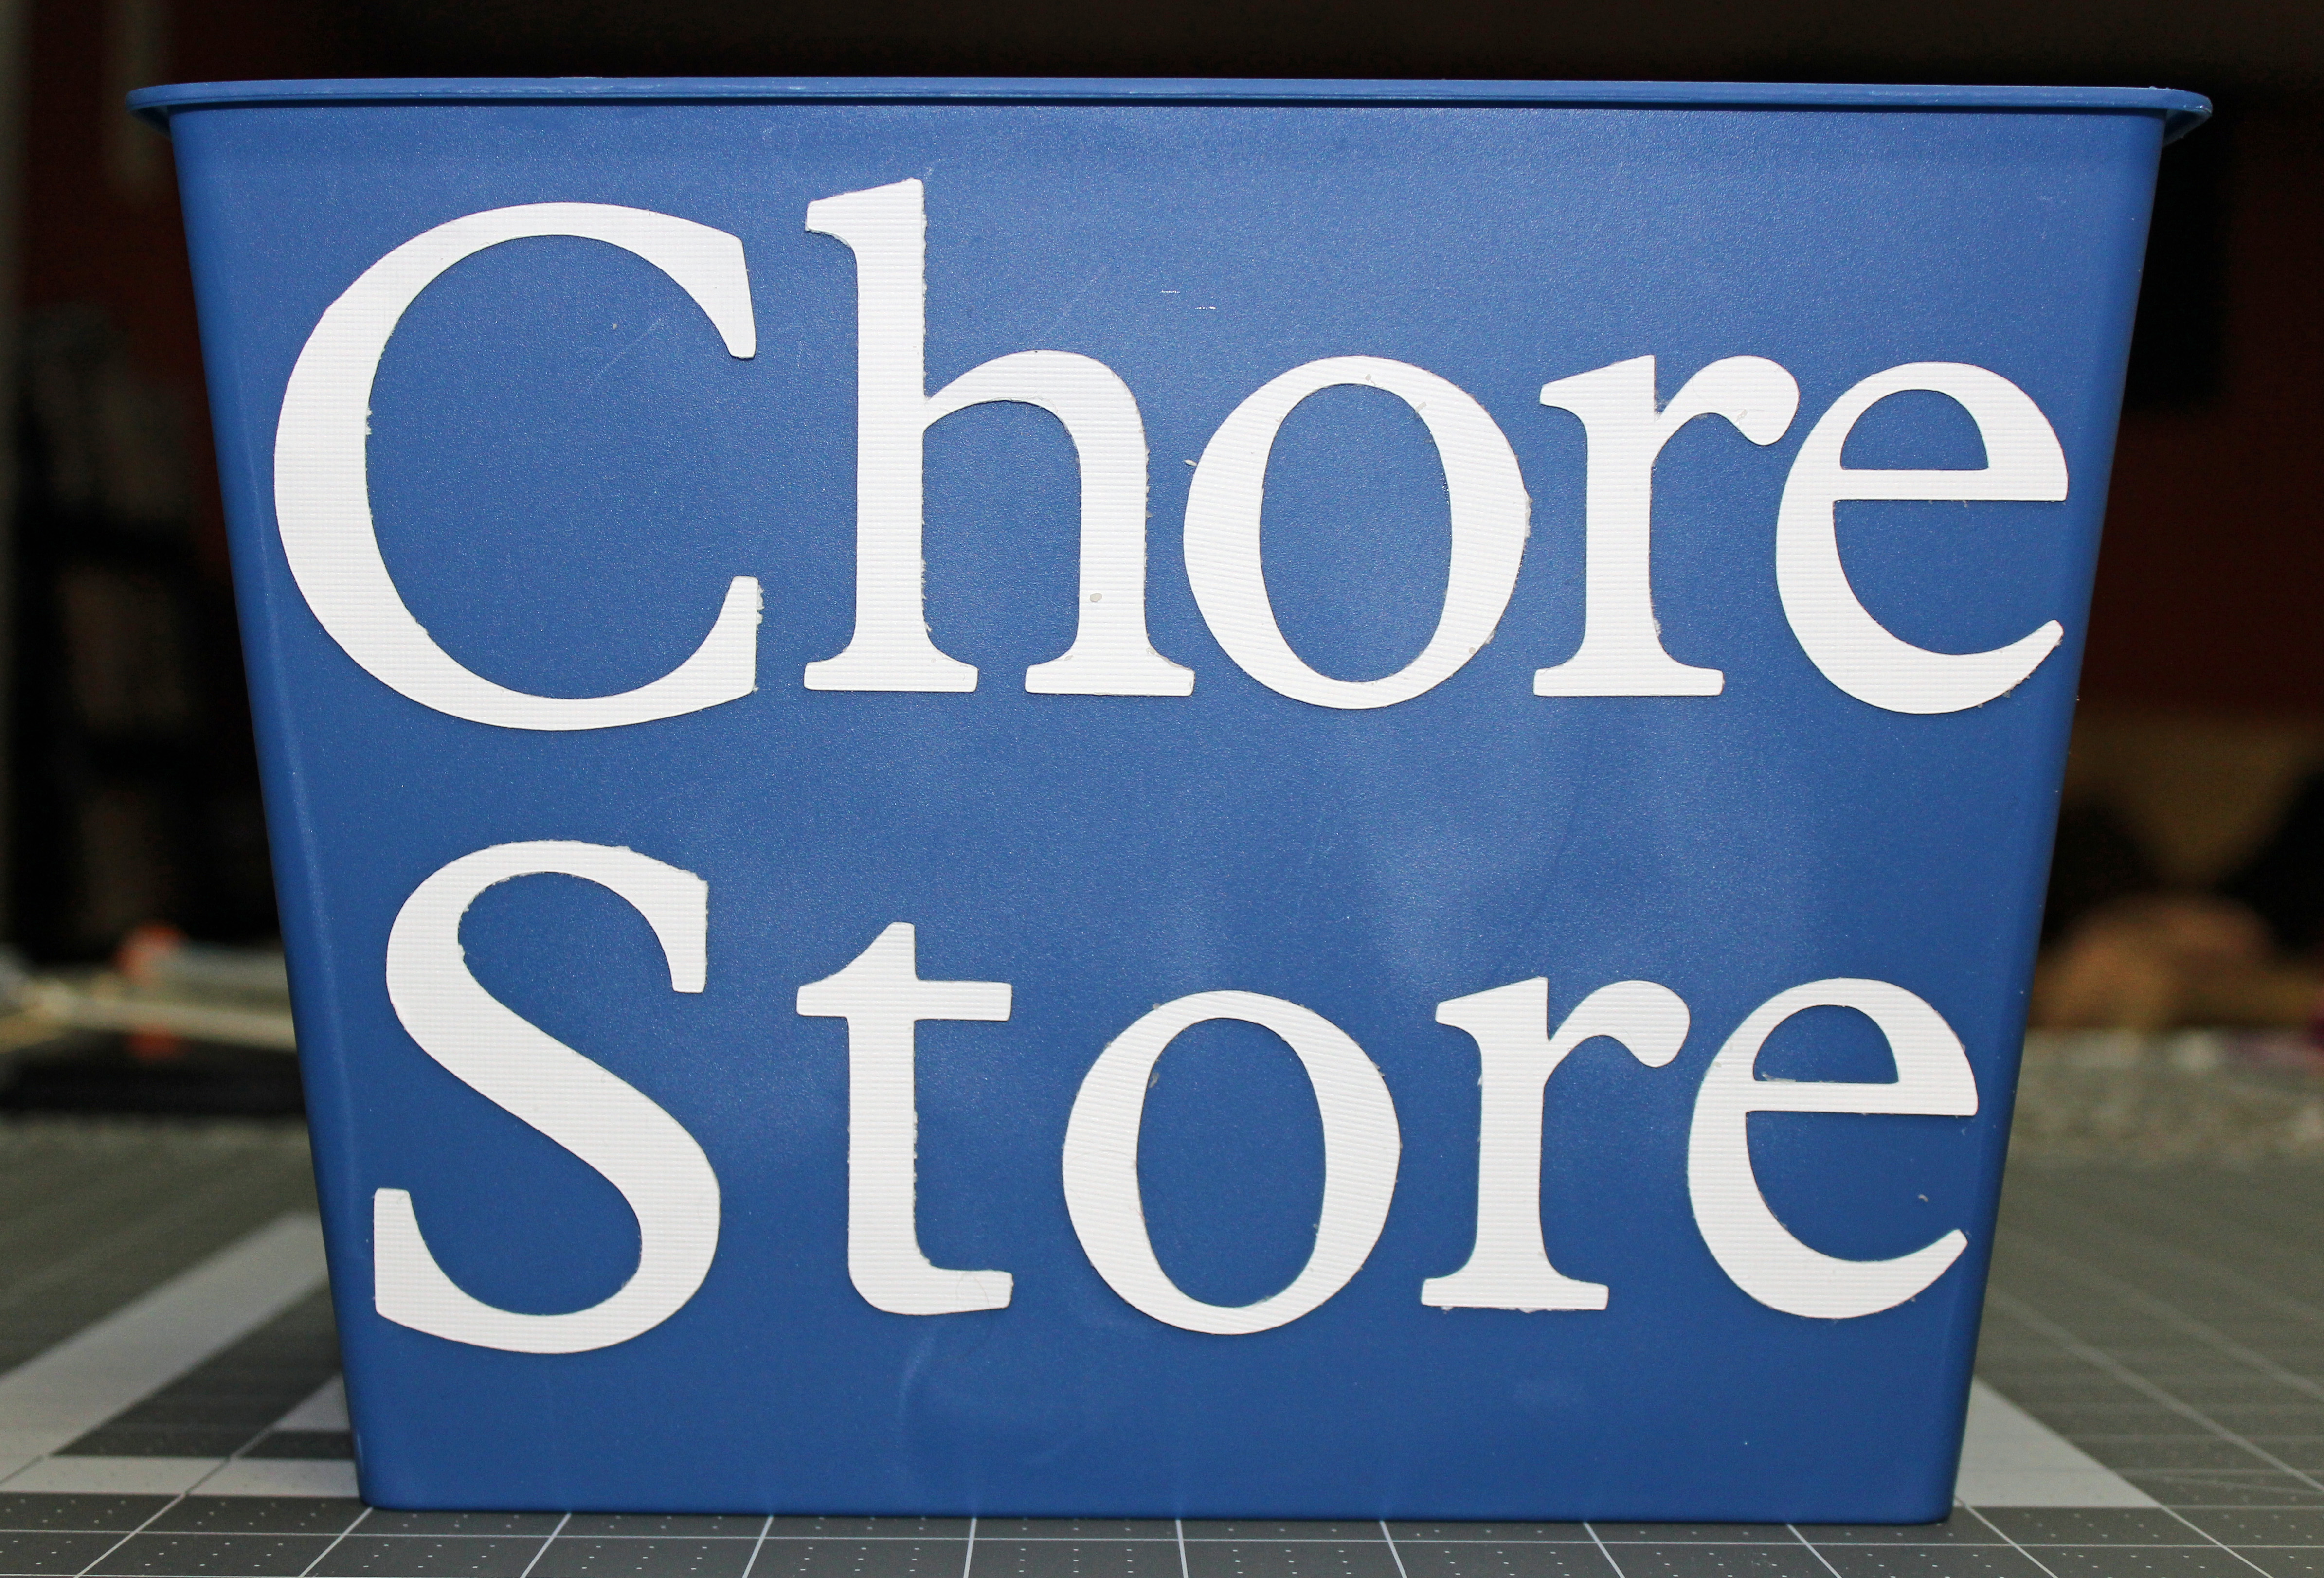 Chore Store Image